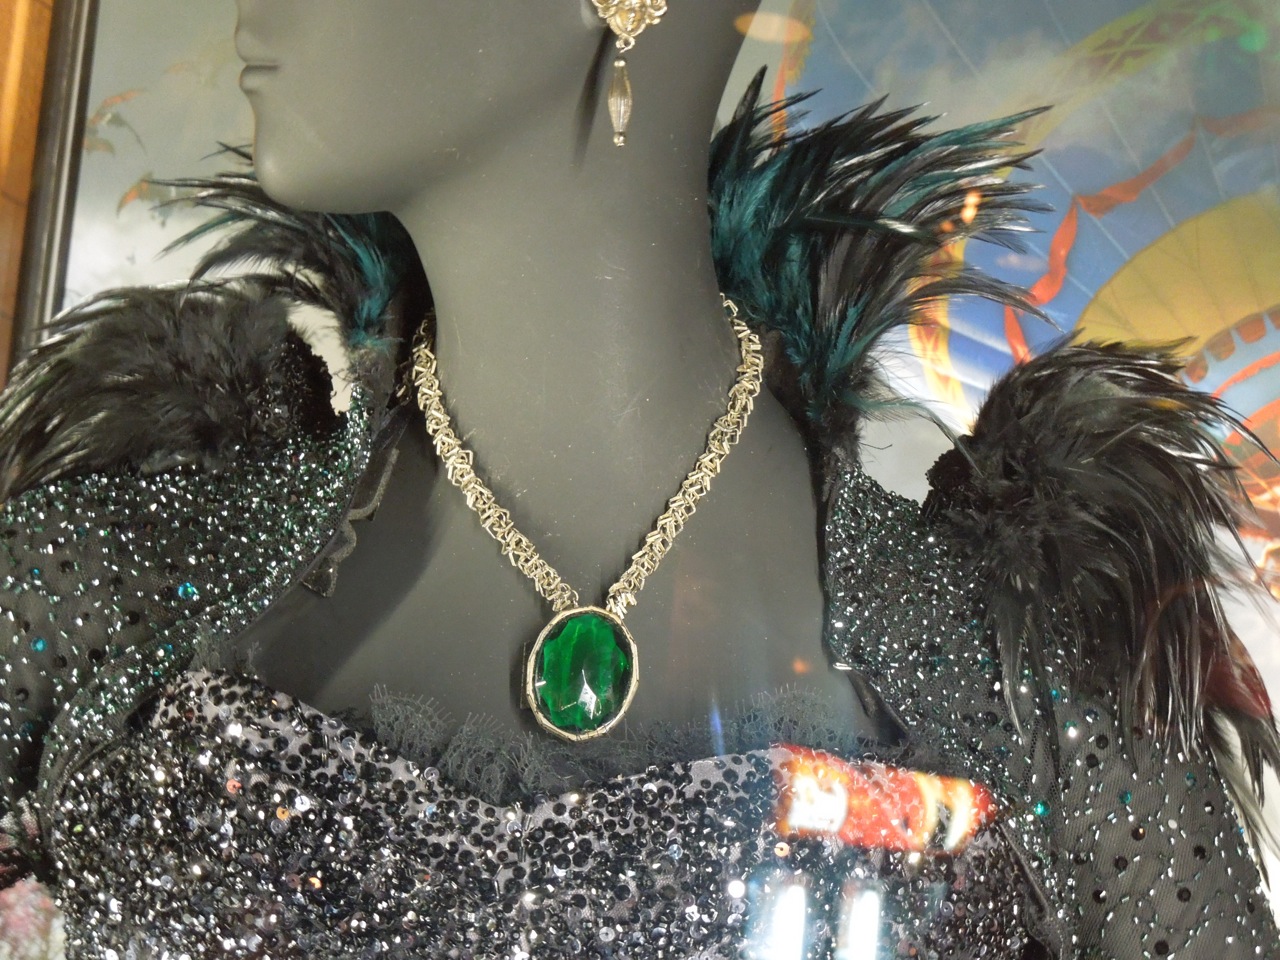 http://2.bp.blogspot.com/-56DRkLgbRTw/UUecMDBVOhI/AAAAAAABDAE/oJStimmHPPE/s1600/Evanora+Oz+costume+emerald+necklace.jpg